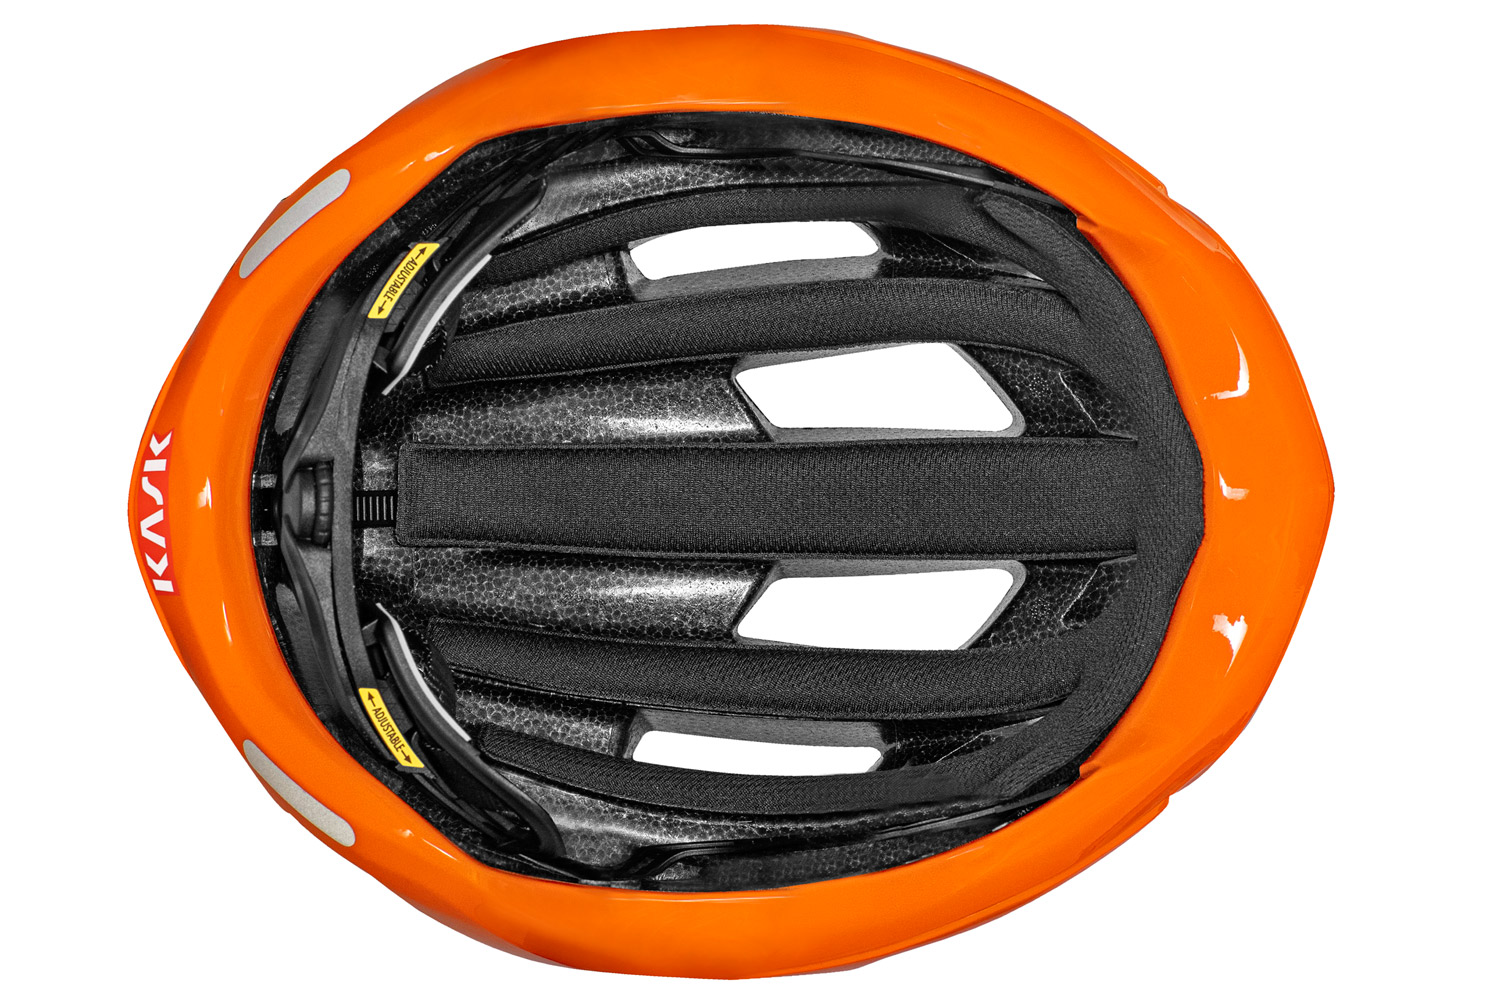 Kask Mojito3 road helmet, updated redesigned lightweight fully-vented semi-aero road bike helmet